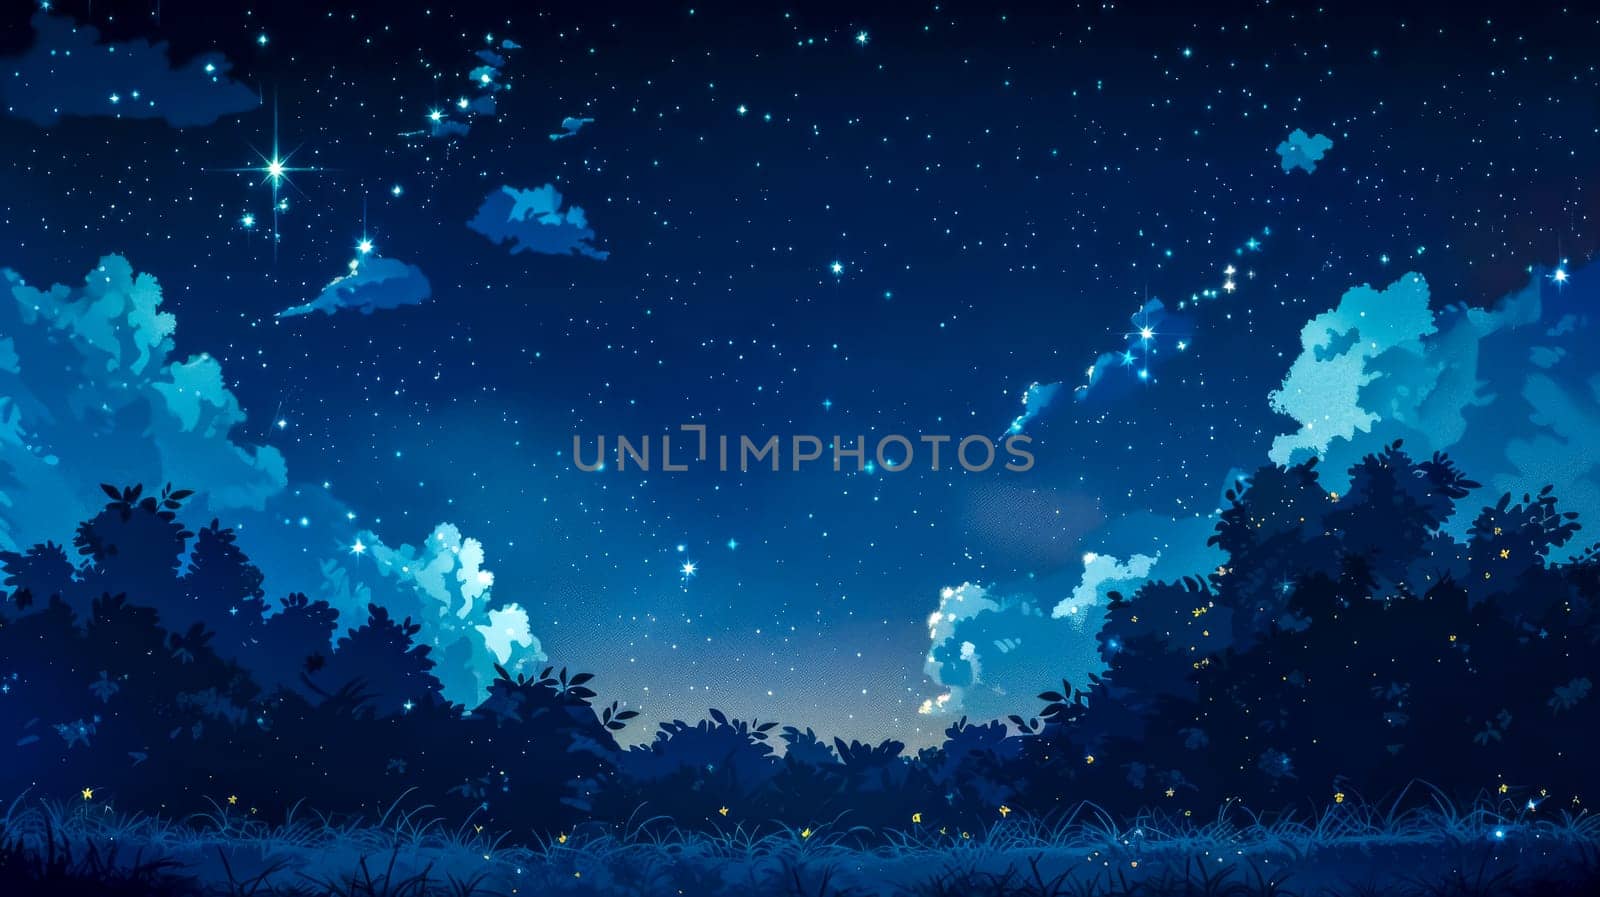 Enchanted starry night sky illustration by Edophoto